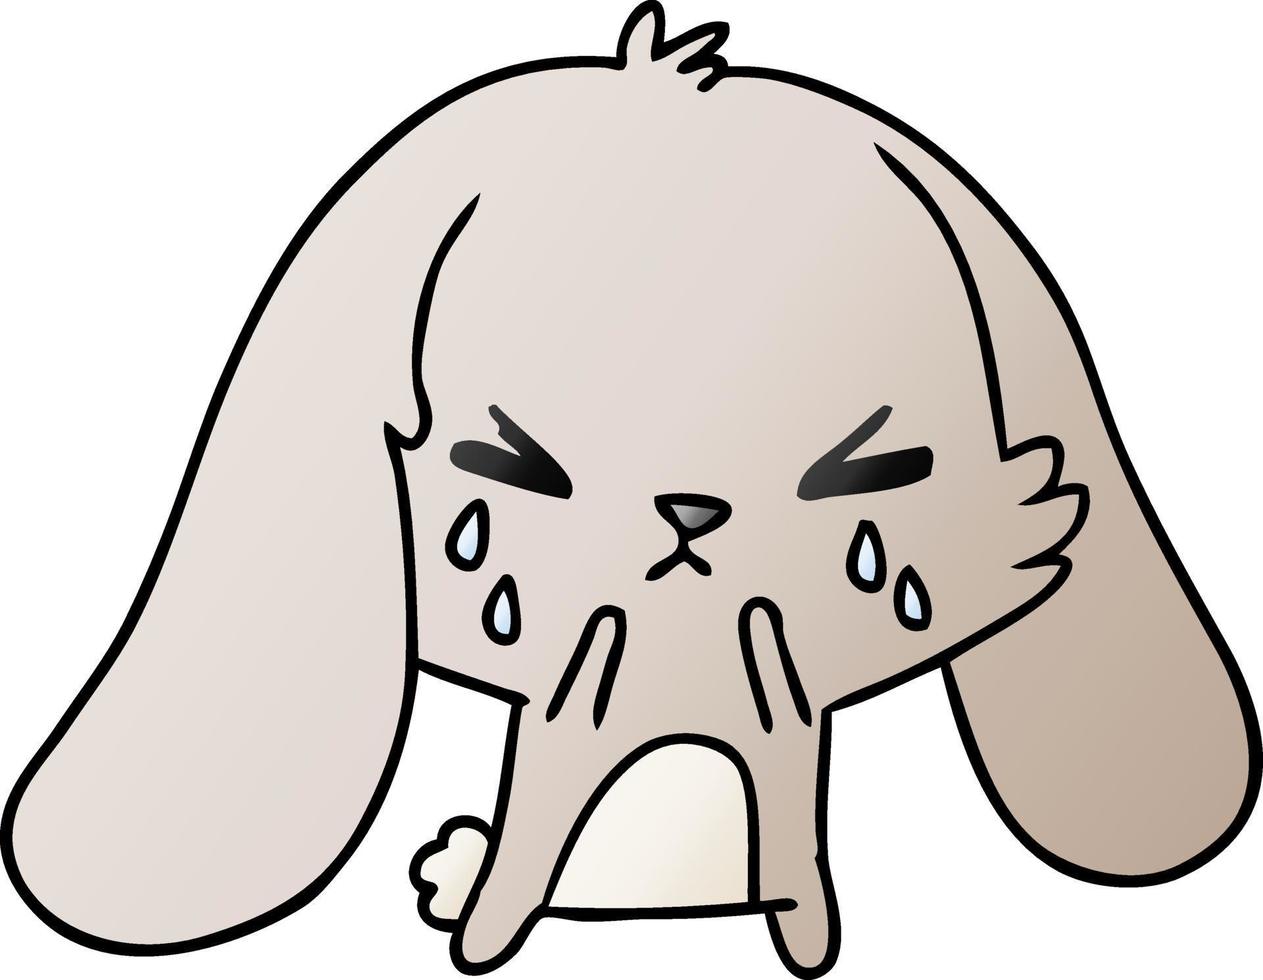 dessin animé dégradé de lapin triste kawaii mignon vecteur